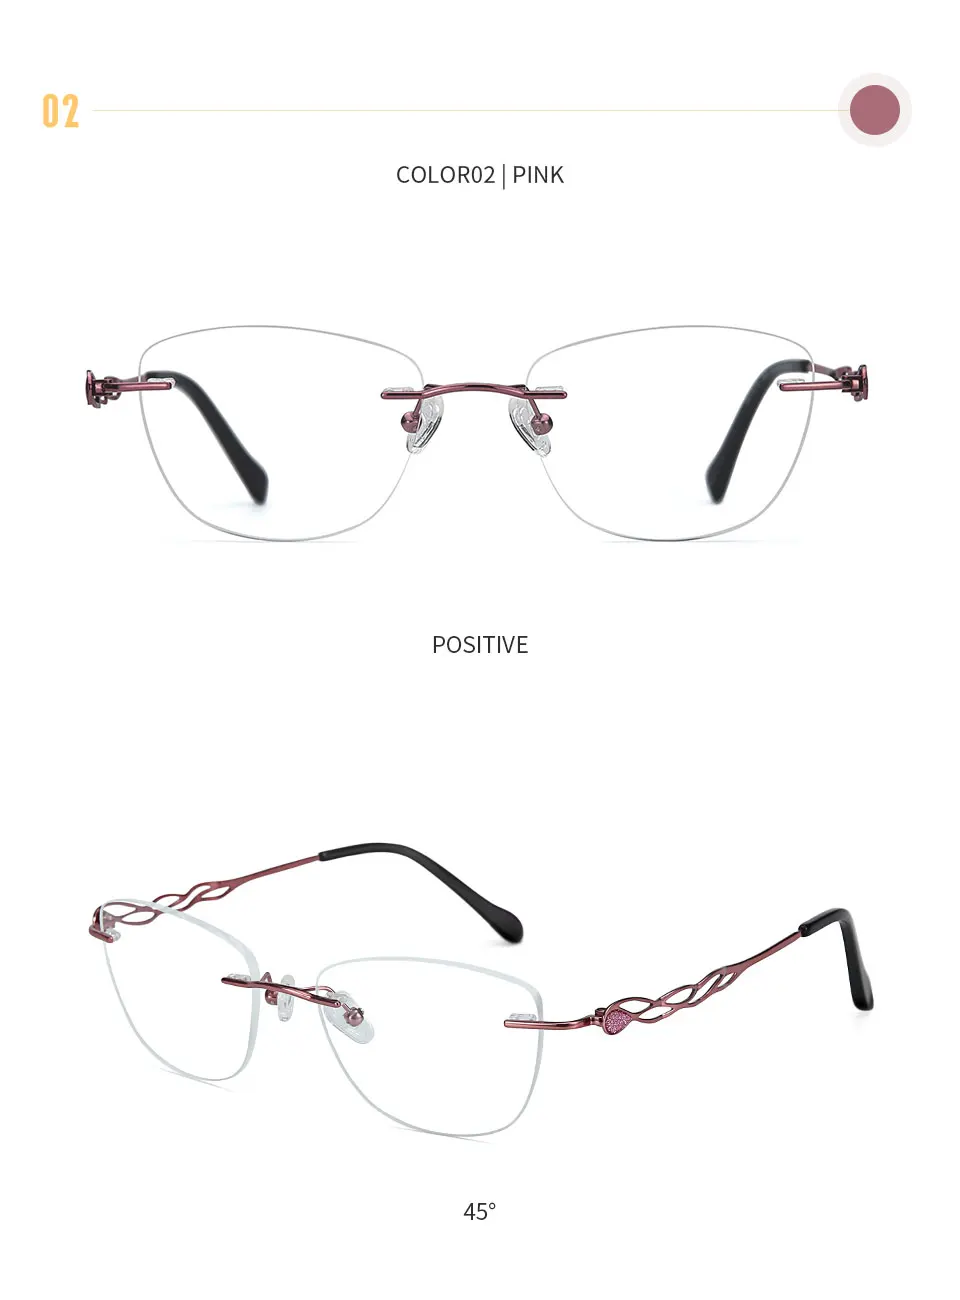 Titanium Glasses Frame Women Ultra Light Eyeglasses Classic Luxury Design MyopiaGlasses Prescription Eyewear New (11)